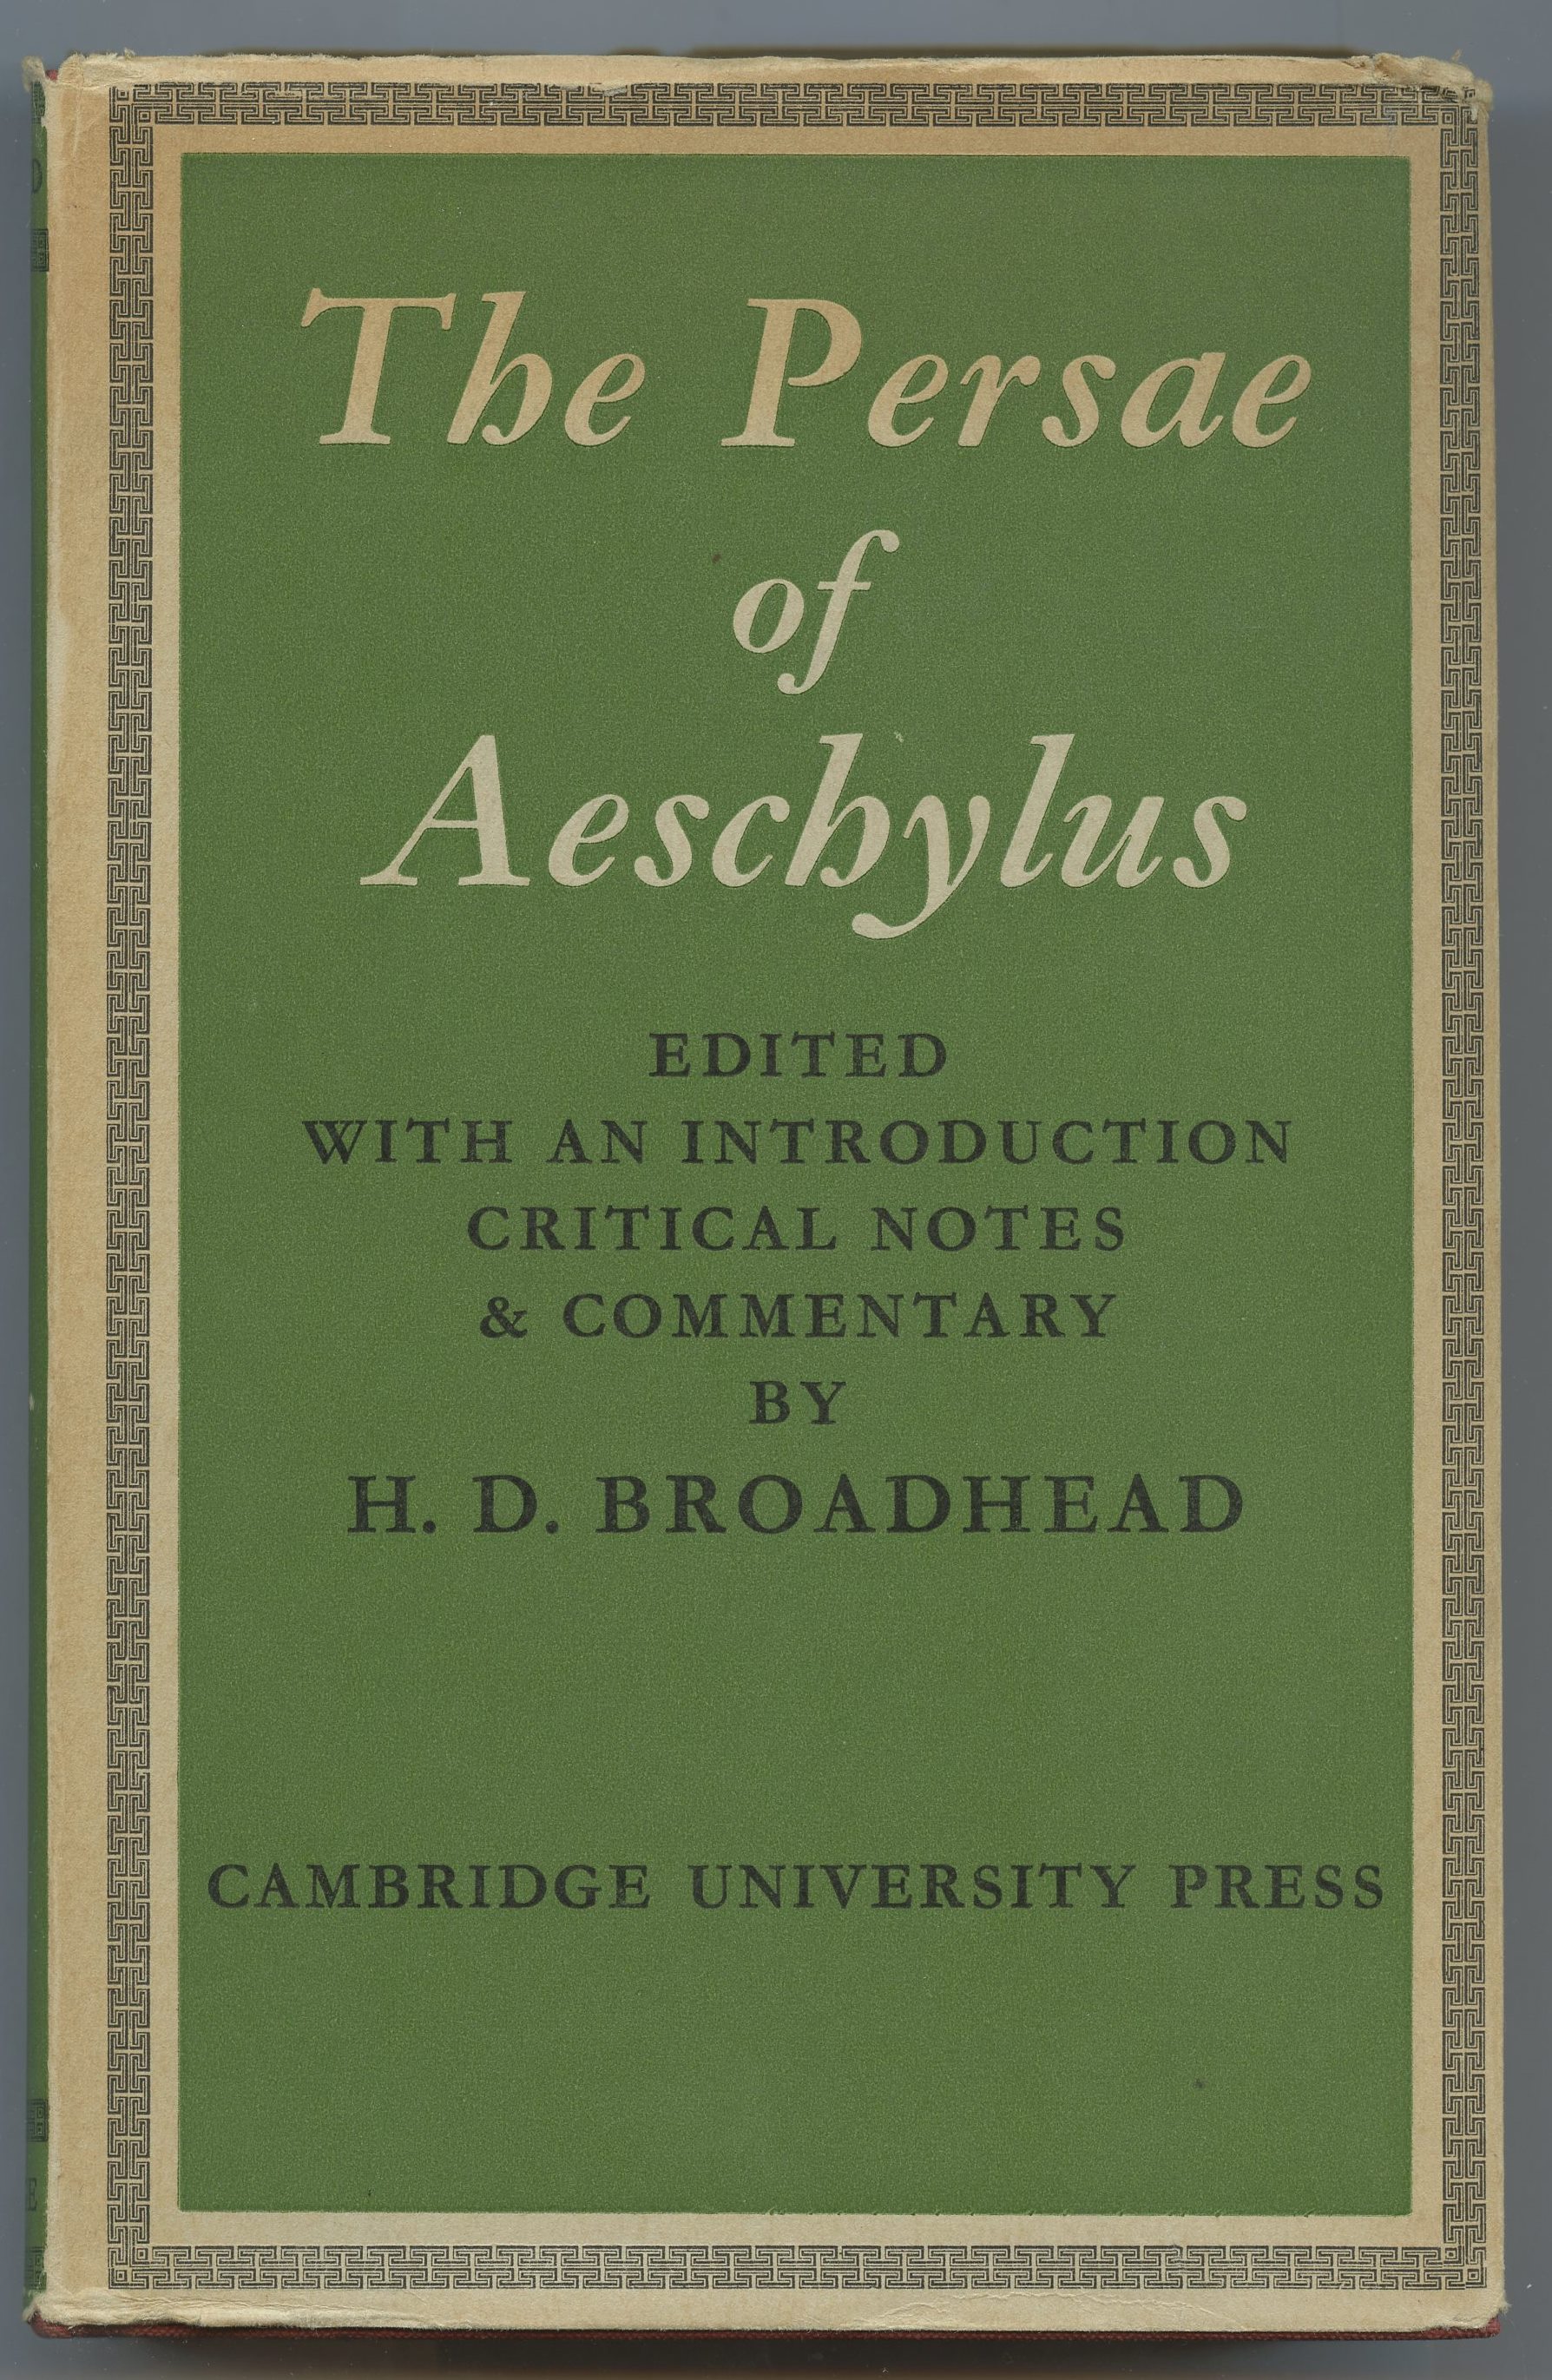 The Persae of Aeschylus - BROADHEAD, H. D. (ed.)